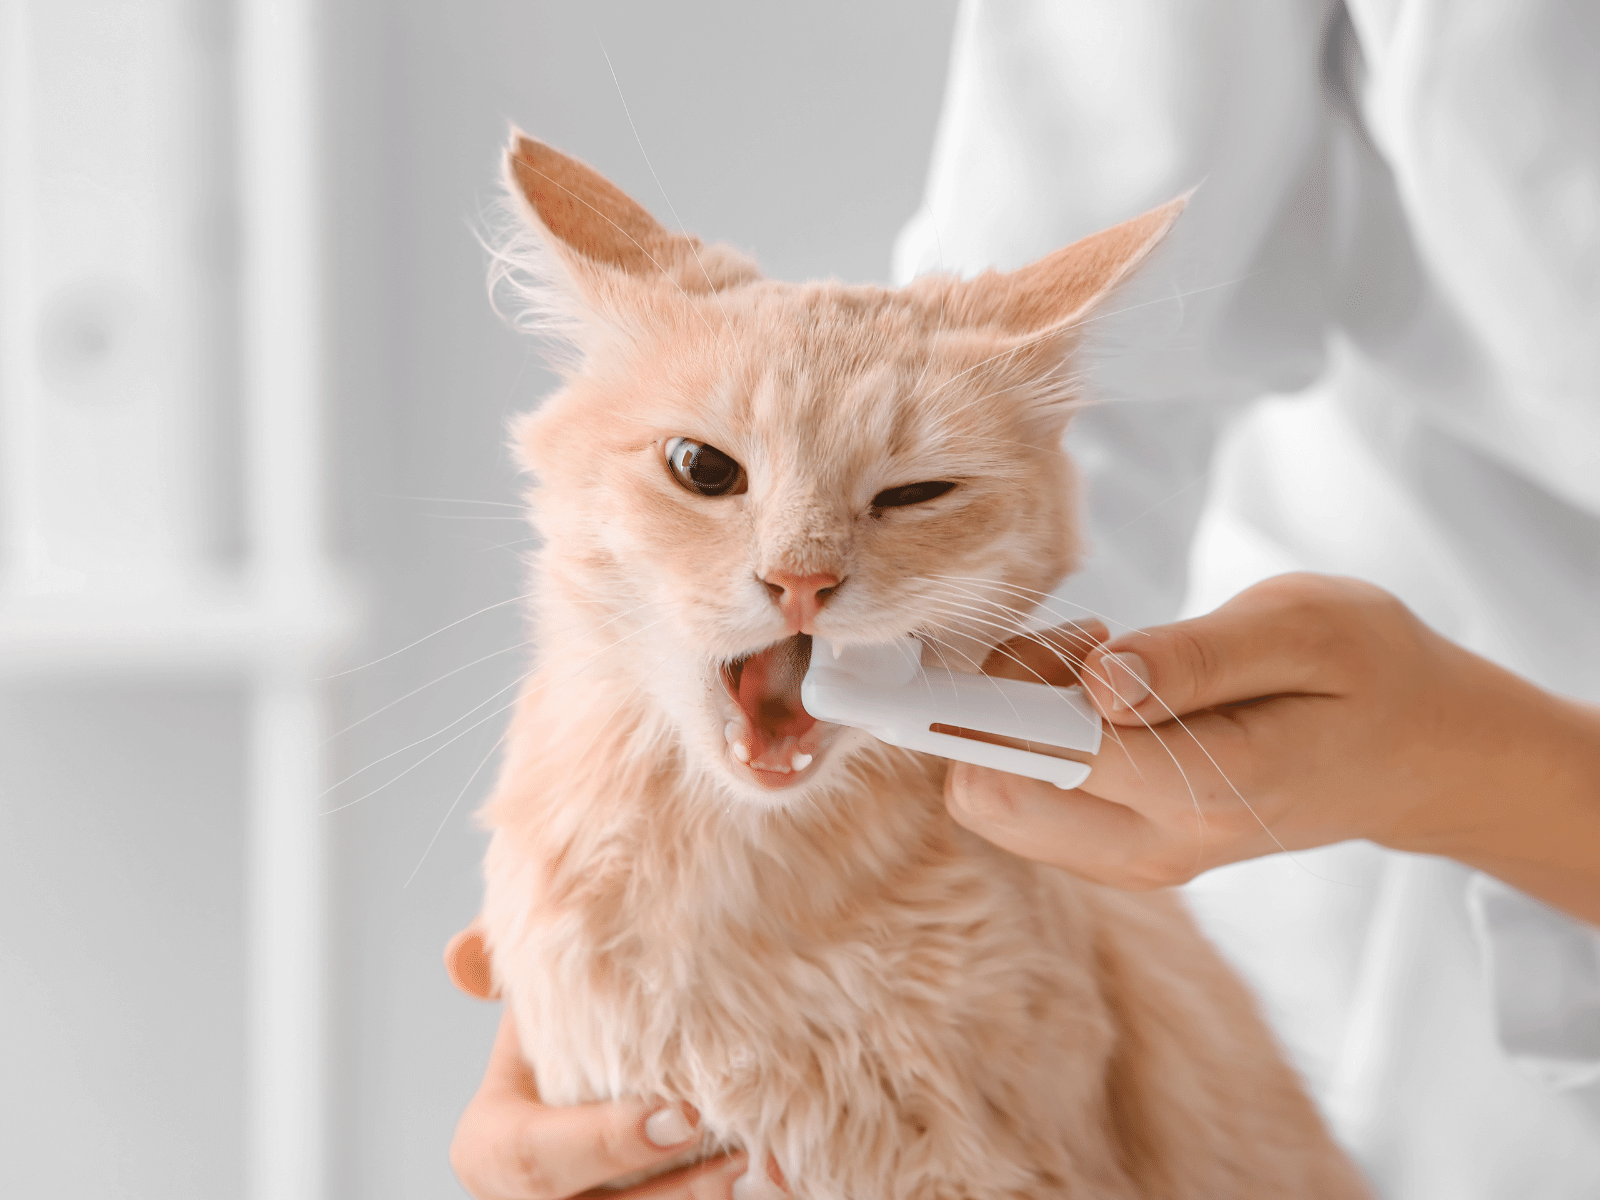 Veterinarian brushing cat's teeth